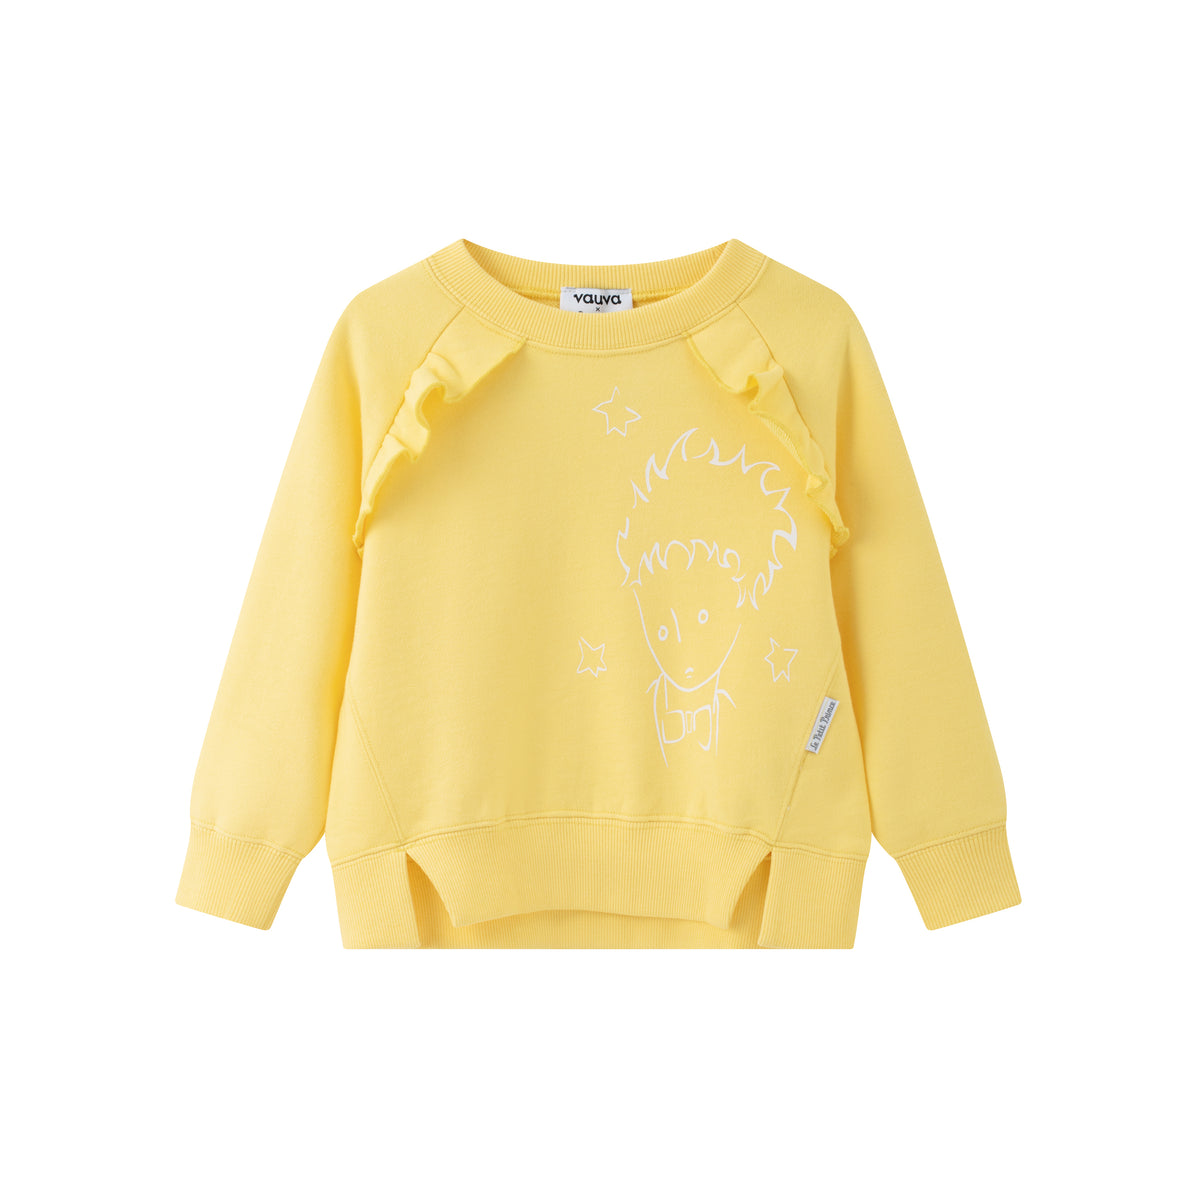 Vauva x Le Petit Prince - Girls Sweater & Dress (2 piece Set/Yellow) product image sweater front